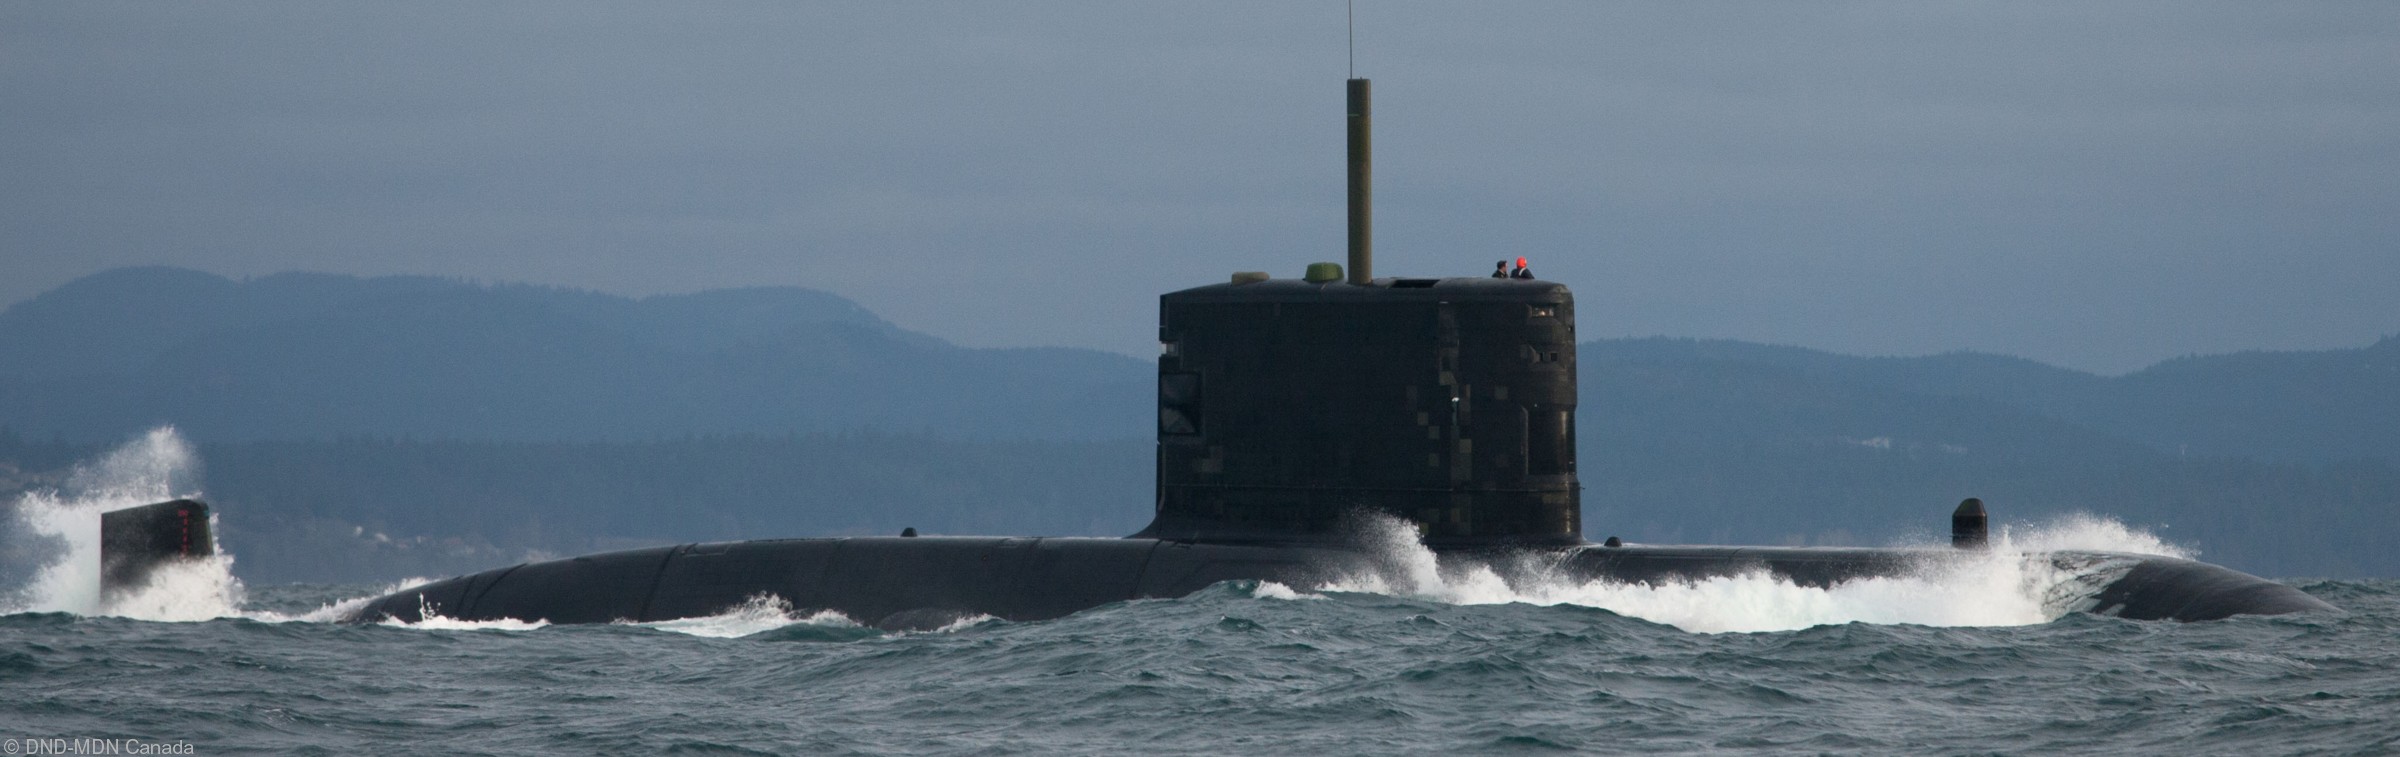 ssk-876 hmcs victoria upholder class attack submarine hunter killer ncsm royal canadian navy 24